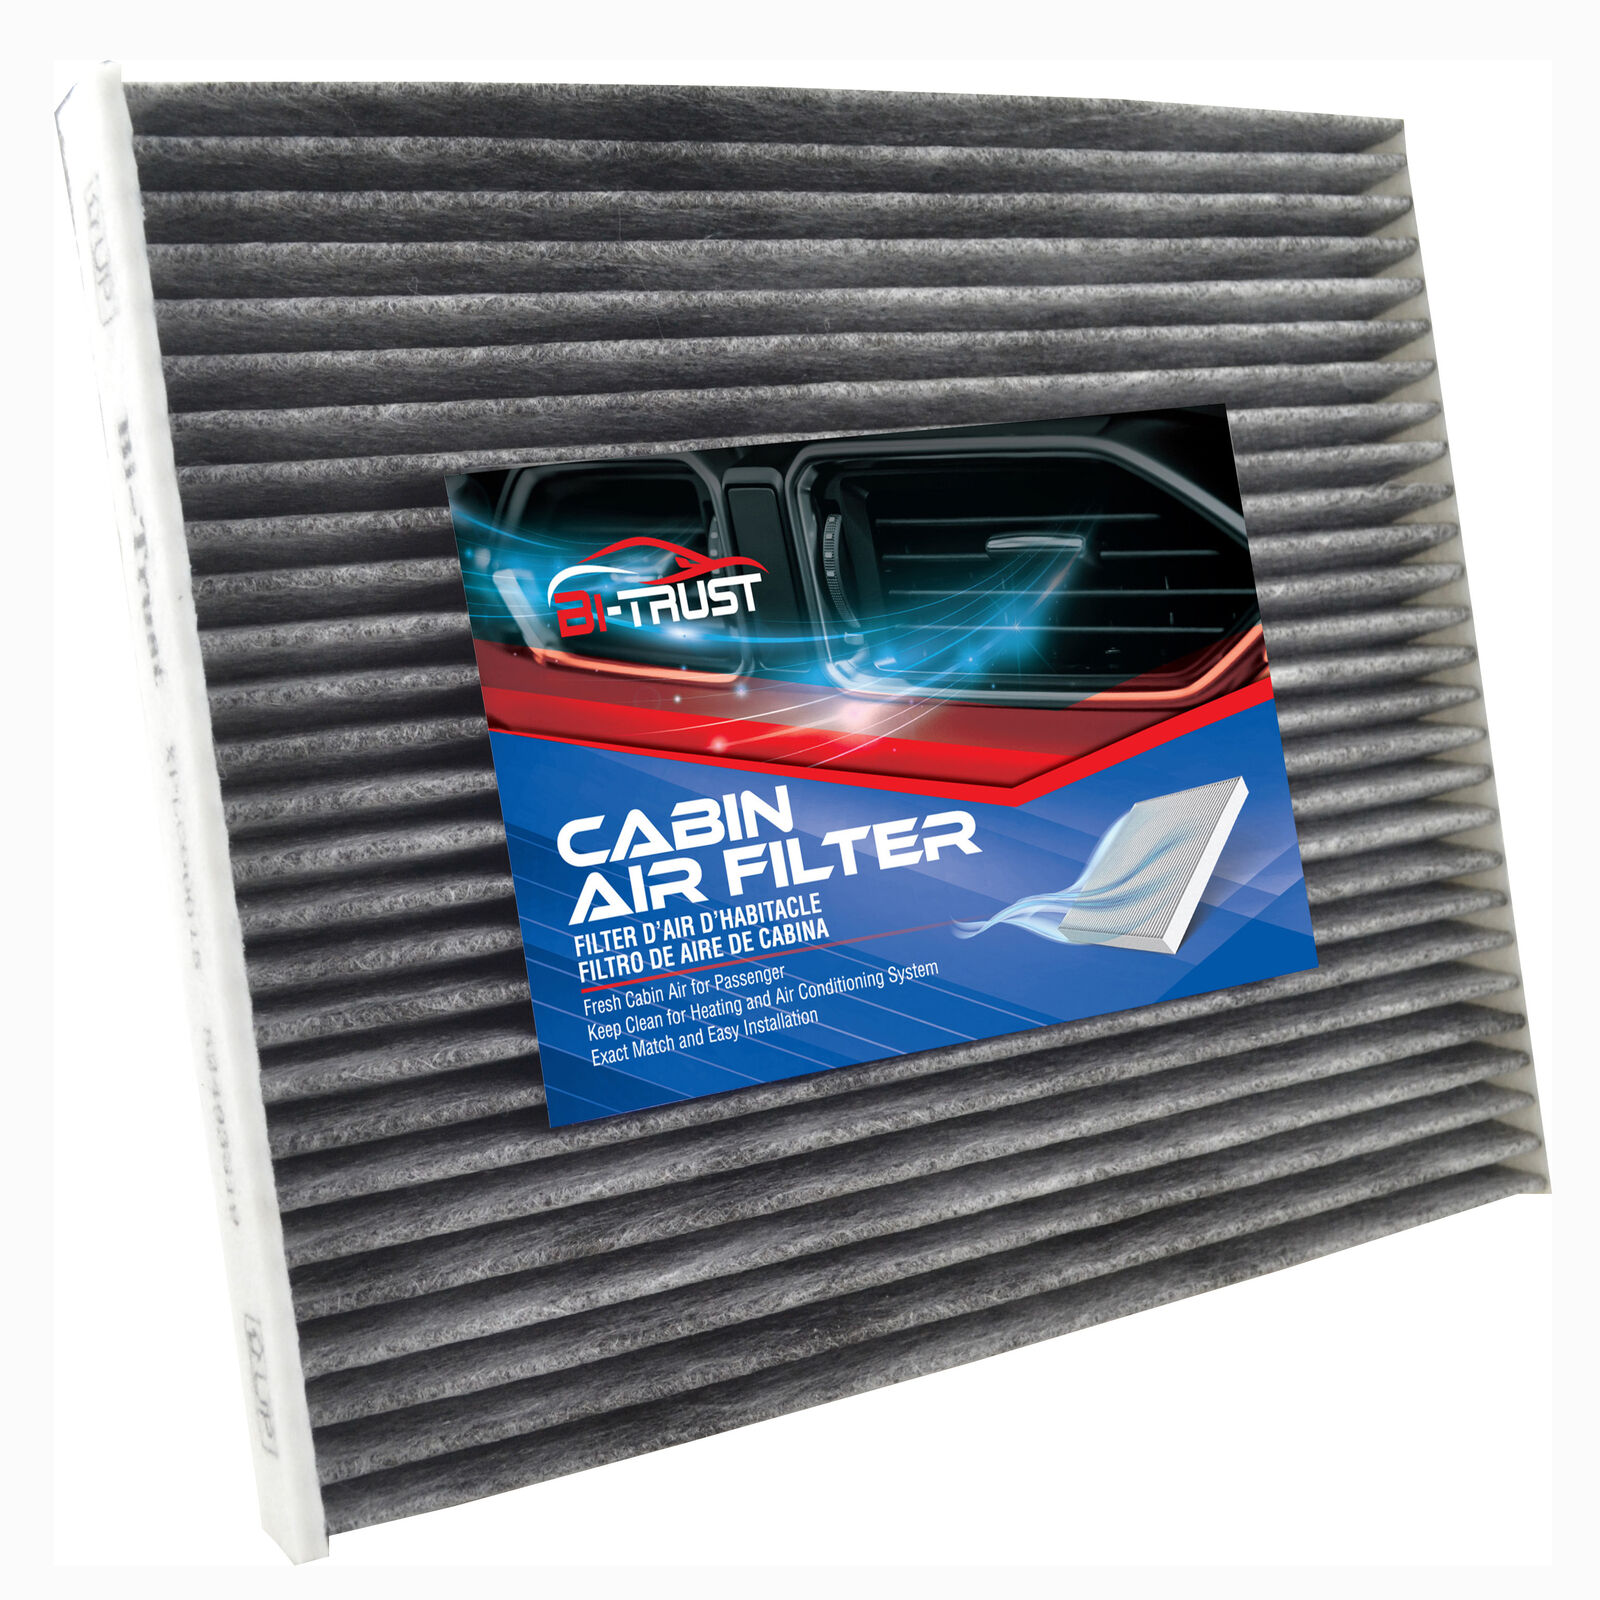 Cabin Air Filter for Pontiac Pursuit 2005-2006 Chevrolet Chevy Cobalt 2005-2010